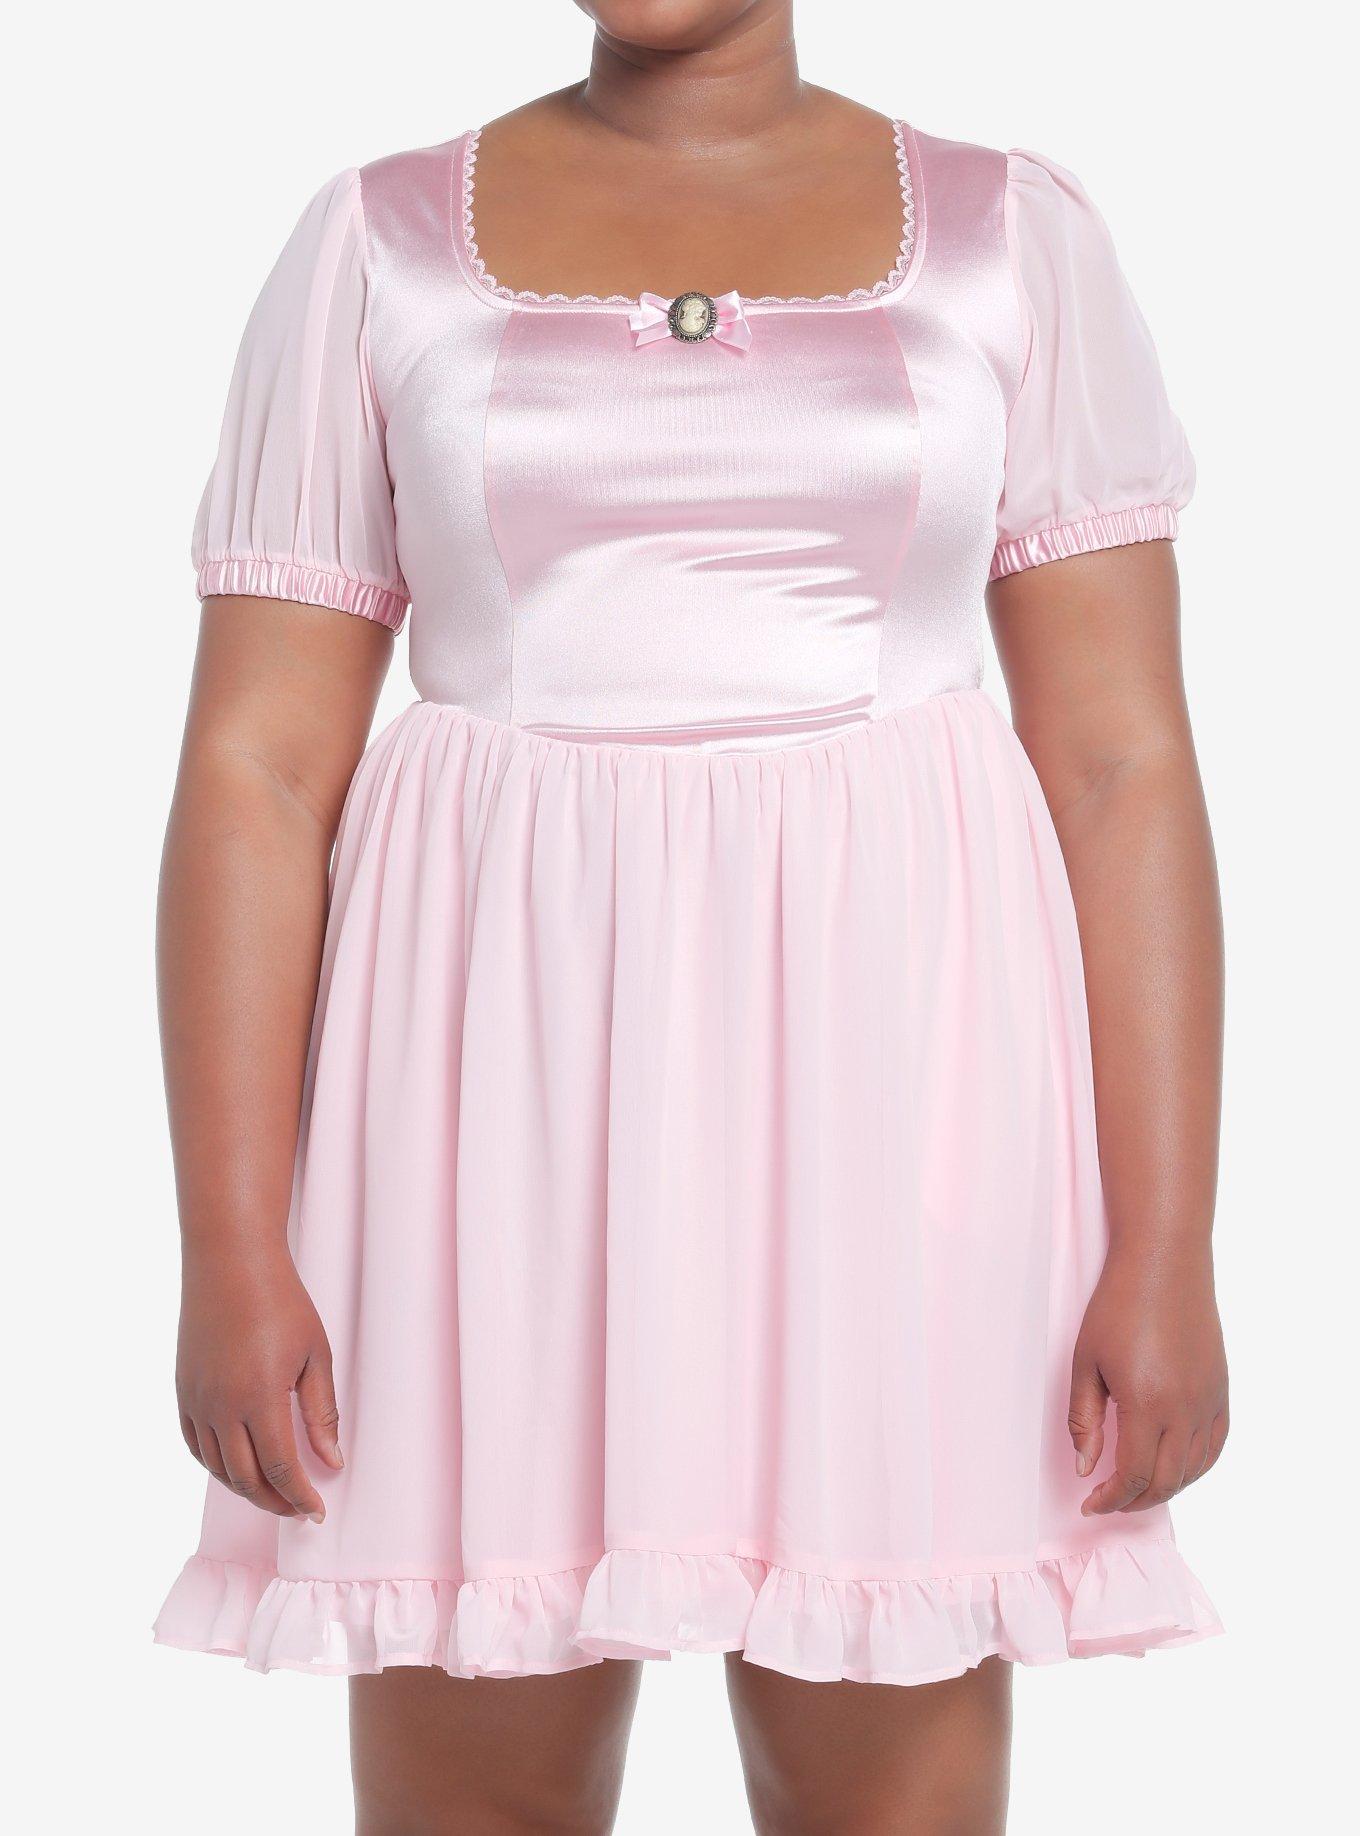 Sweet Society Pink Cameo Chiffon Dress Plus Size, PINK, hi-res